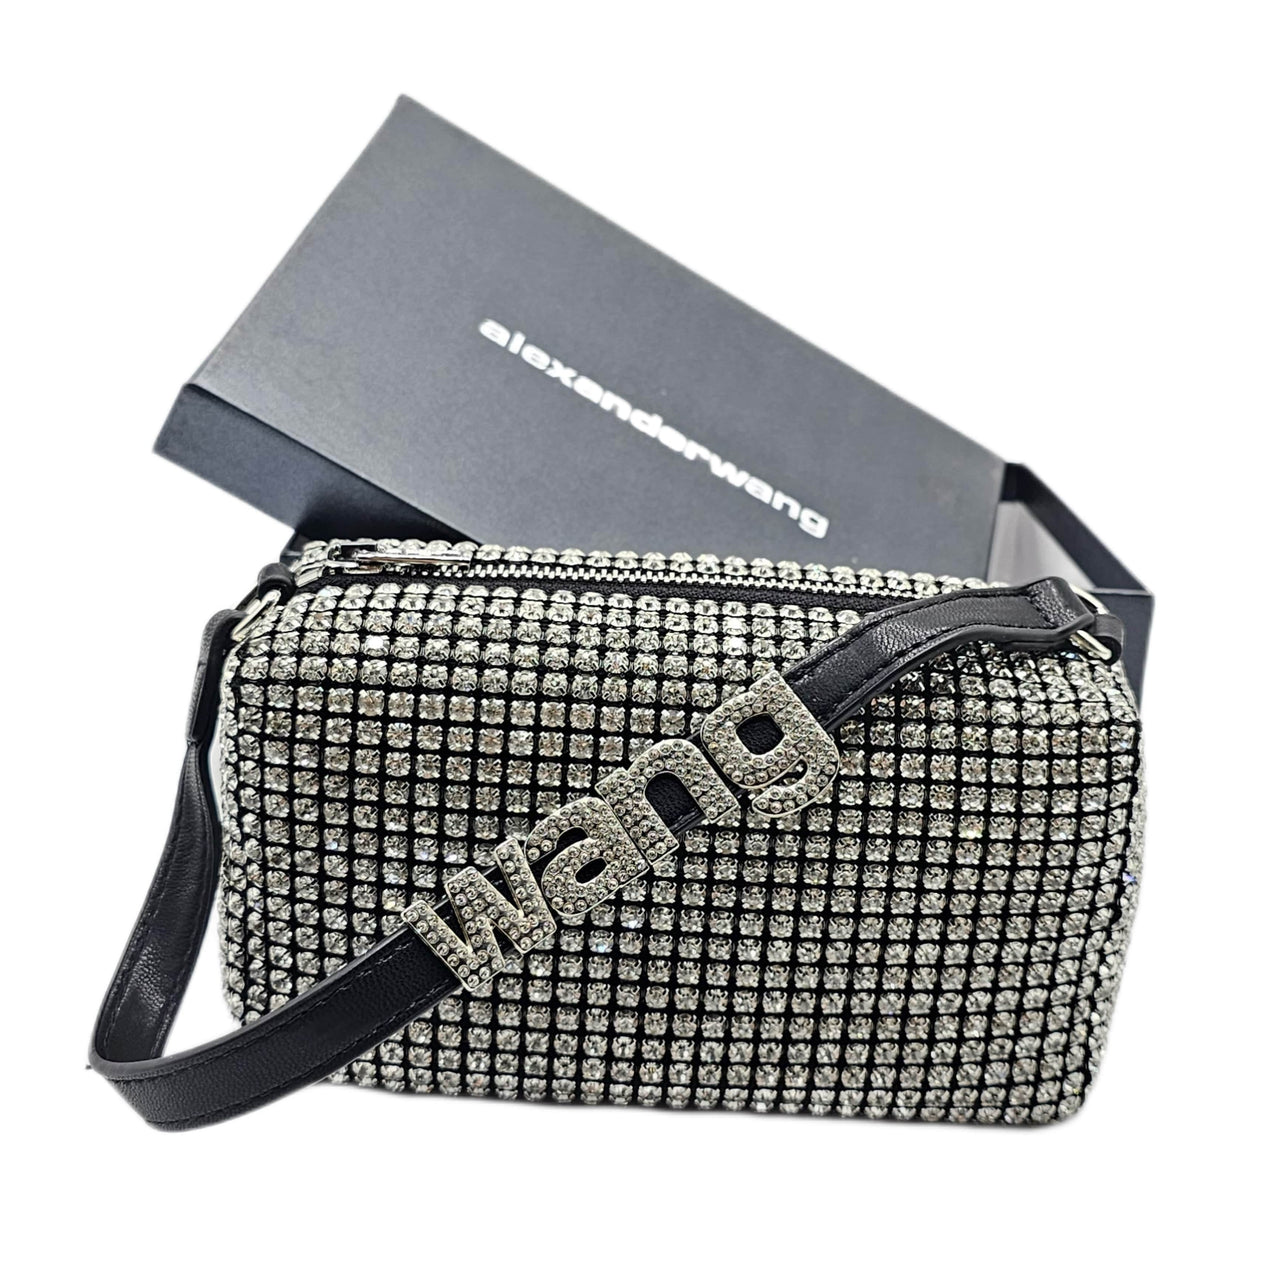 The Bag Couture Handbags, Wallets & Cases Alexander Wang Heiress Pouch in Crystal Mesh Crossbody / Handbag